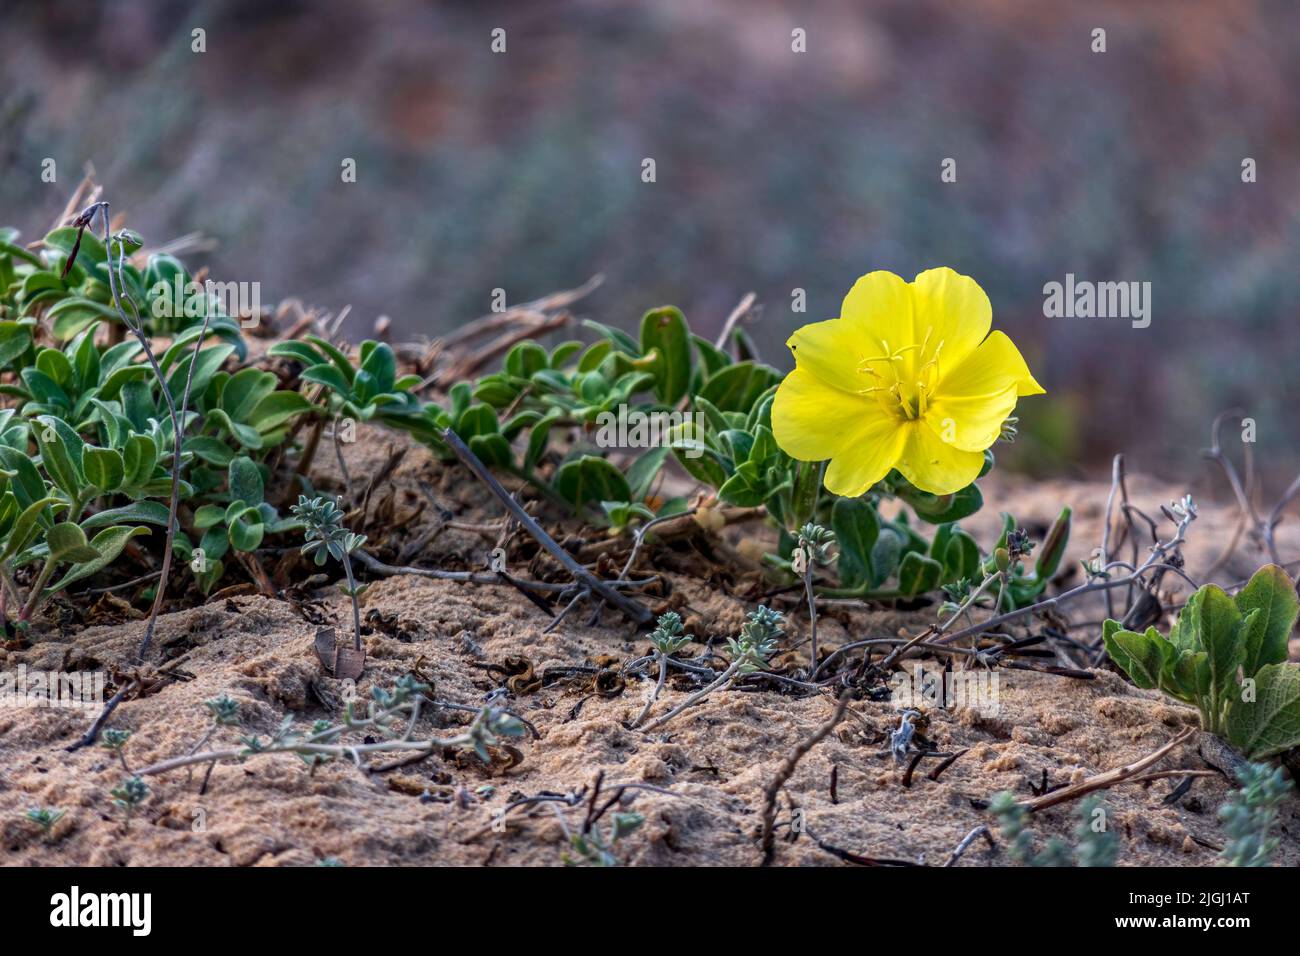 Yellow flower of Oenothera drummondii closeup on blurred background Stock Photo